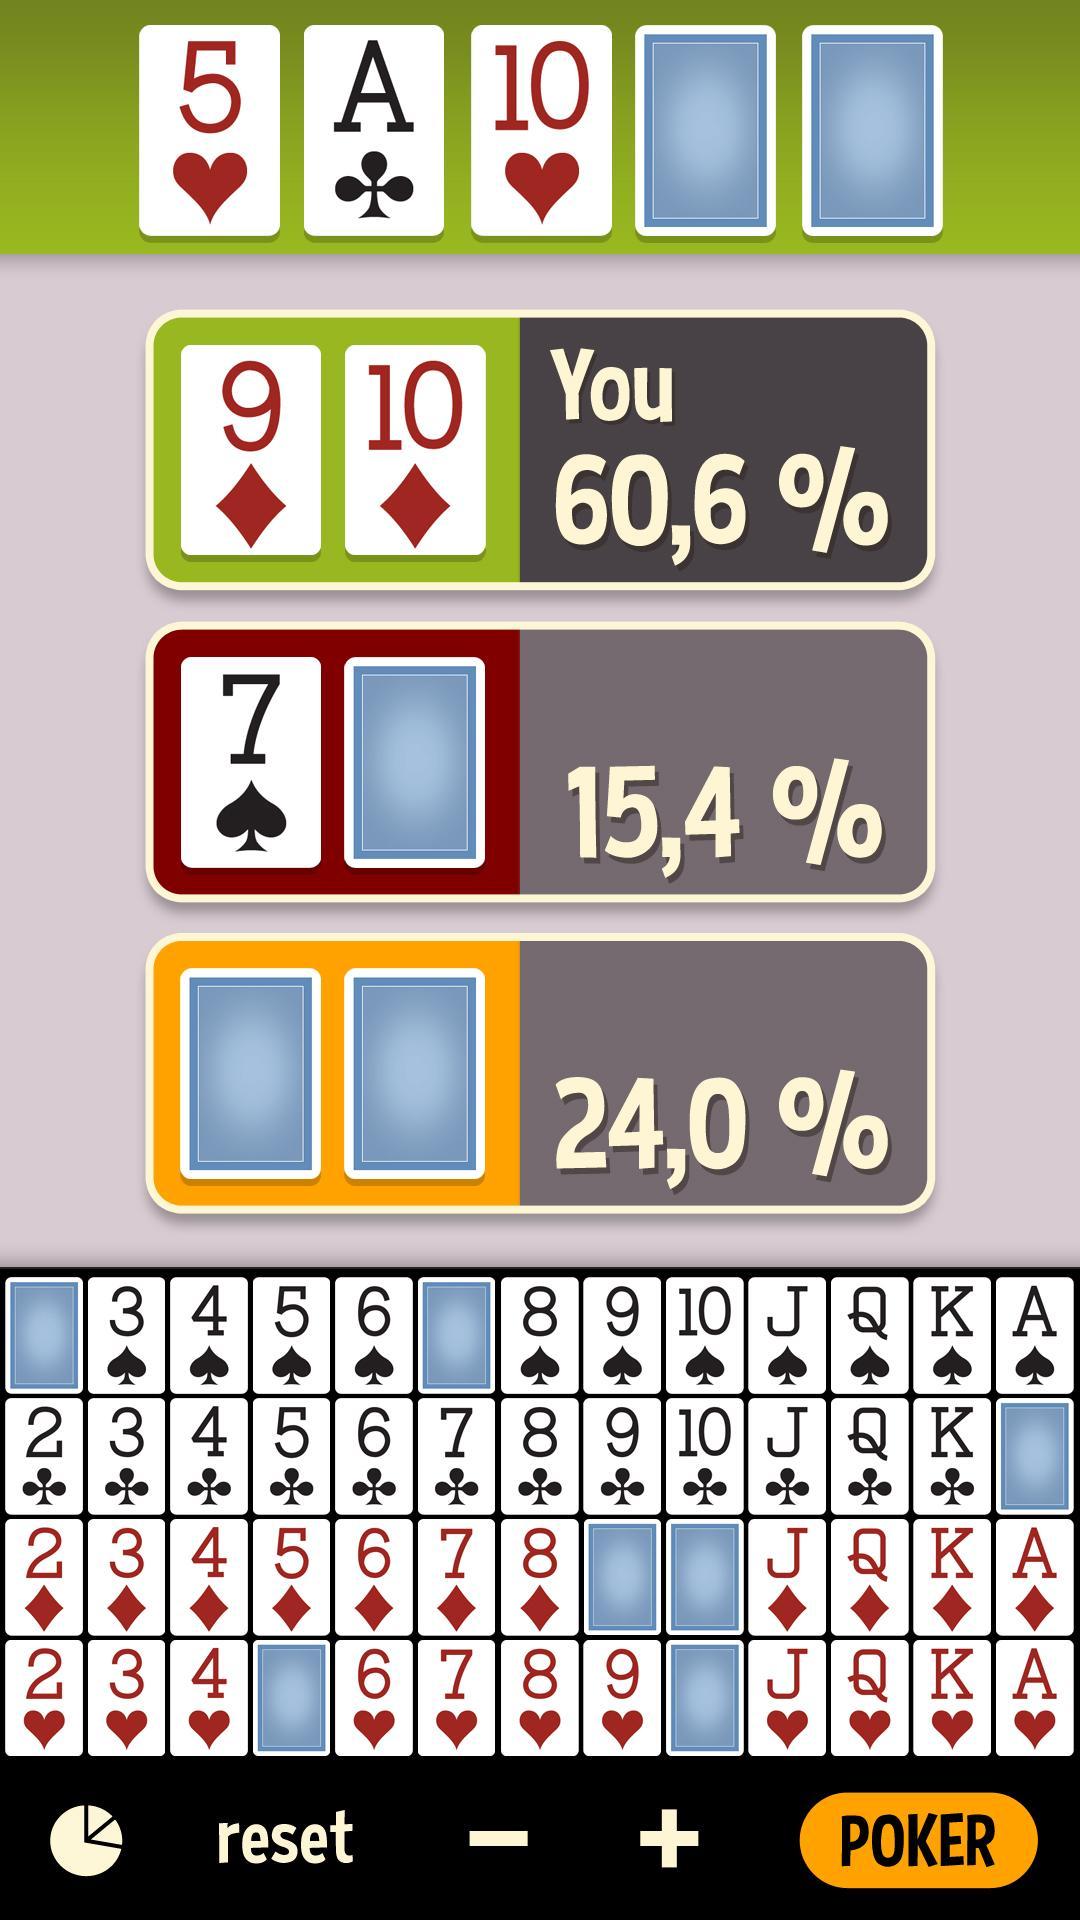 Poker Odds Calculator Offline for Android - APK Download